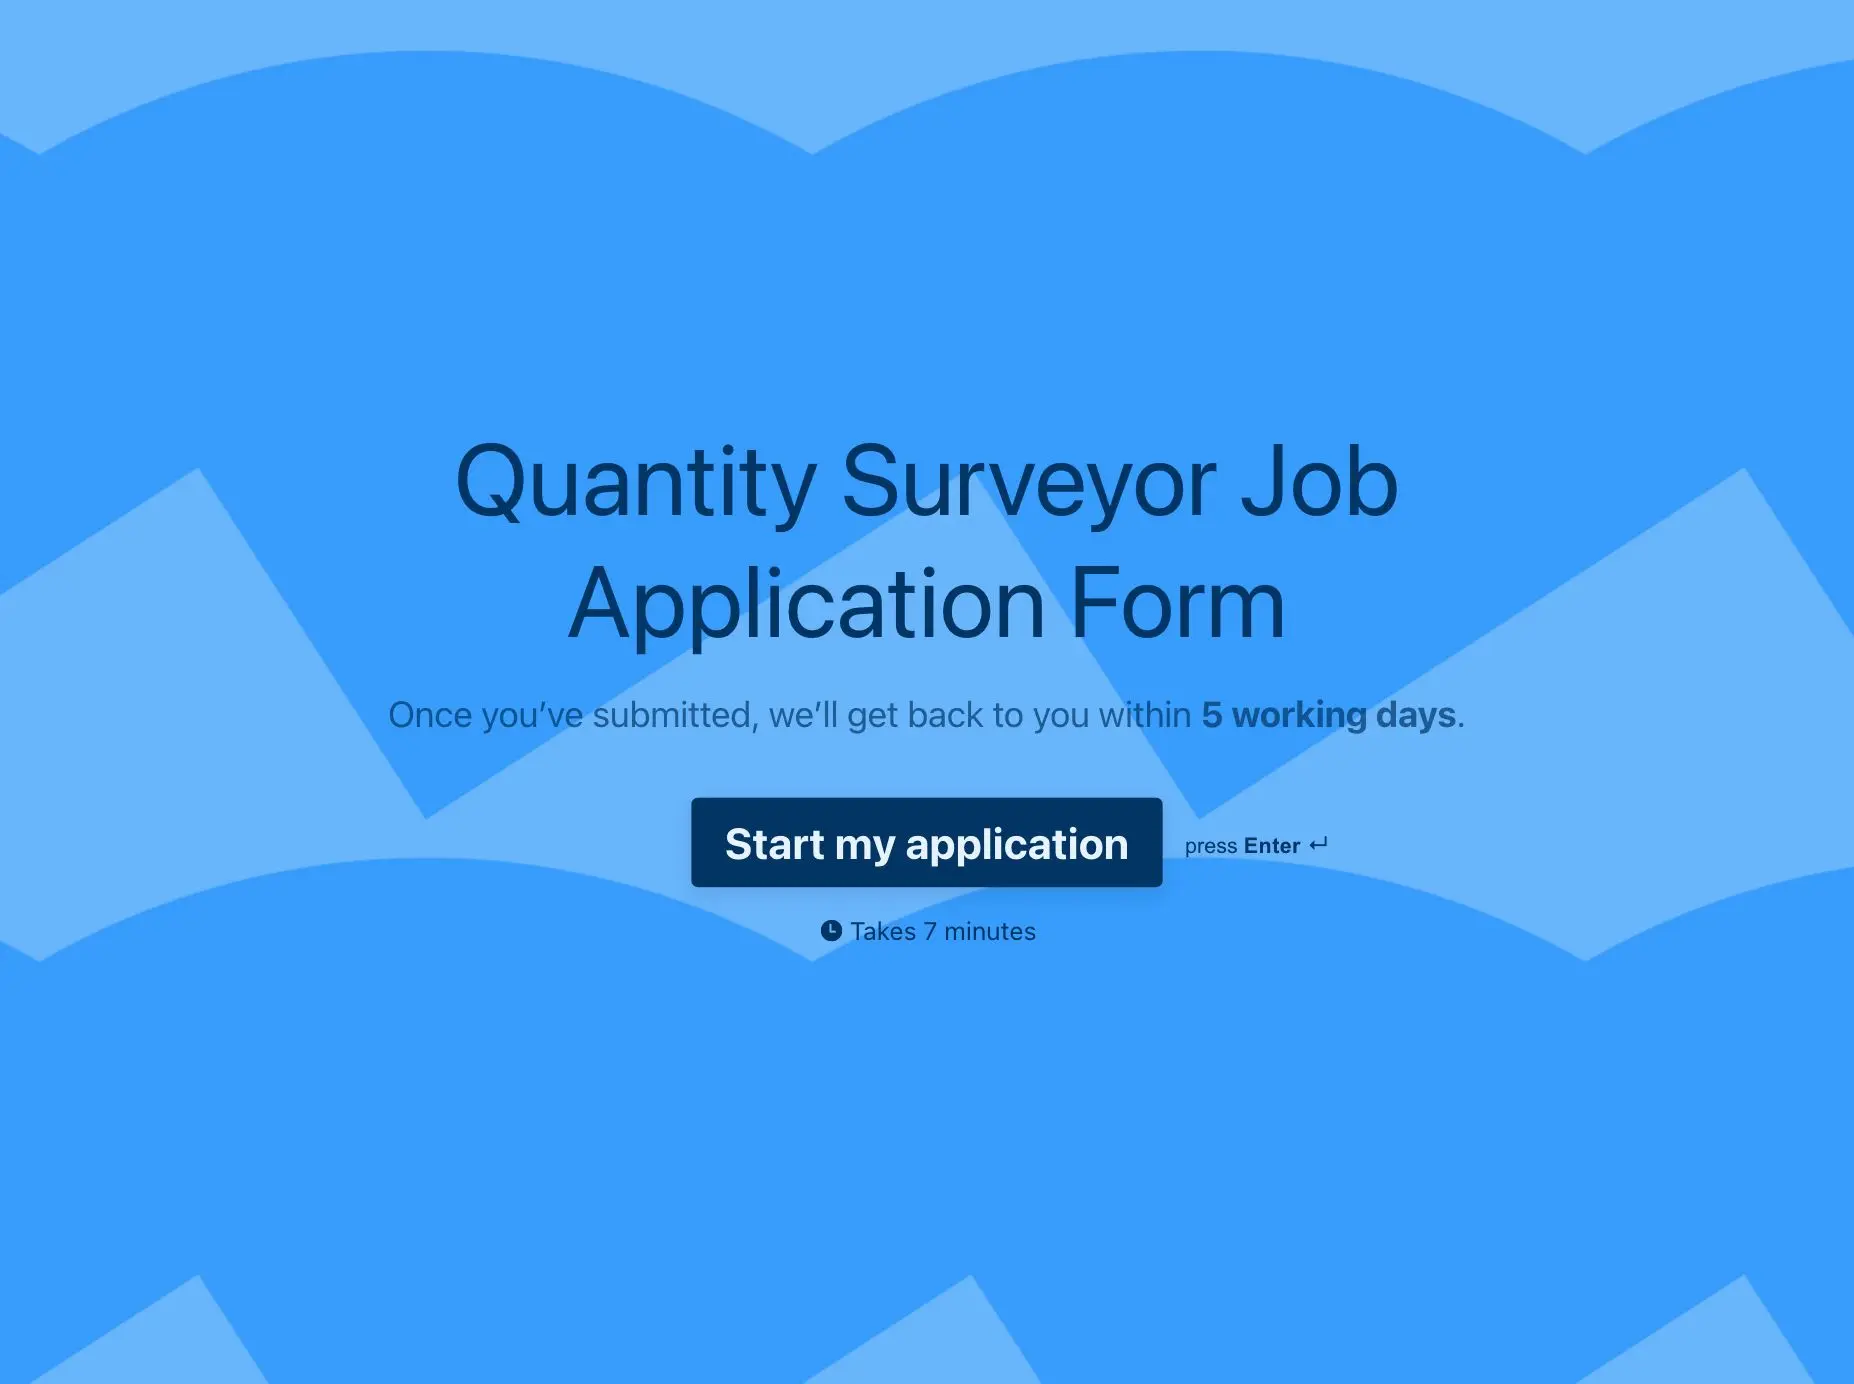 Quantity Surveyor Job Application Form Template Hero